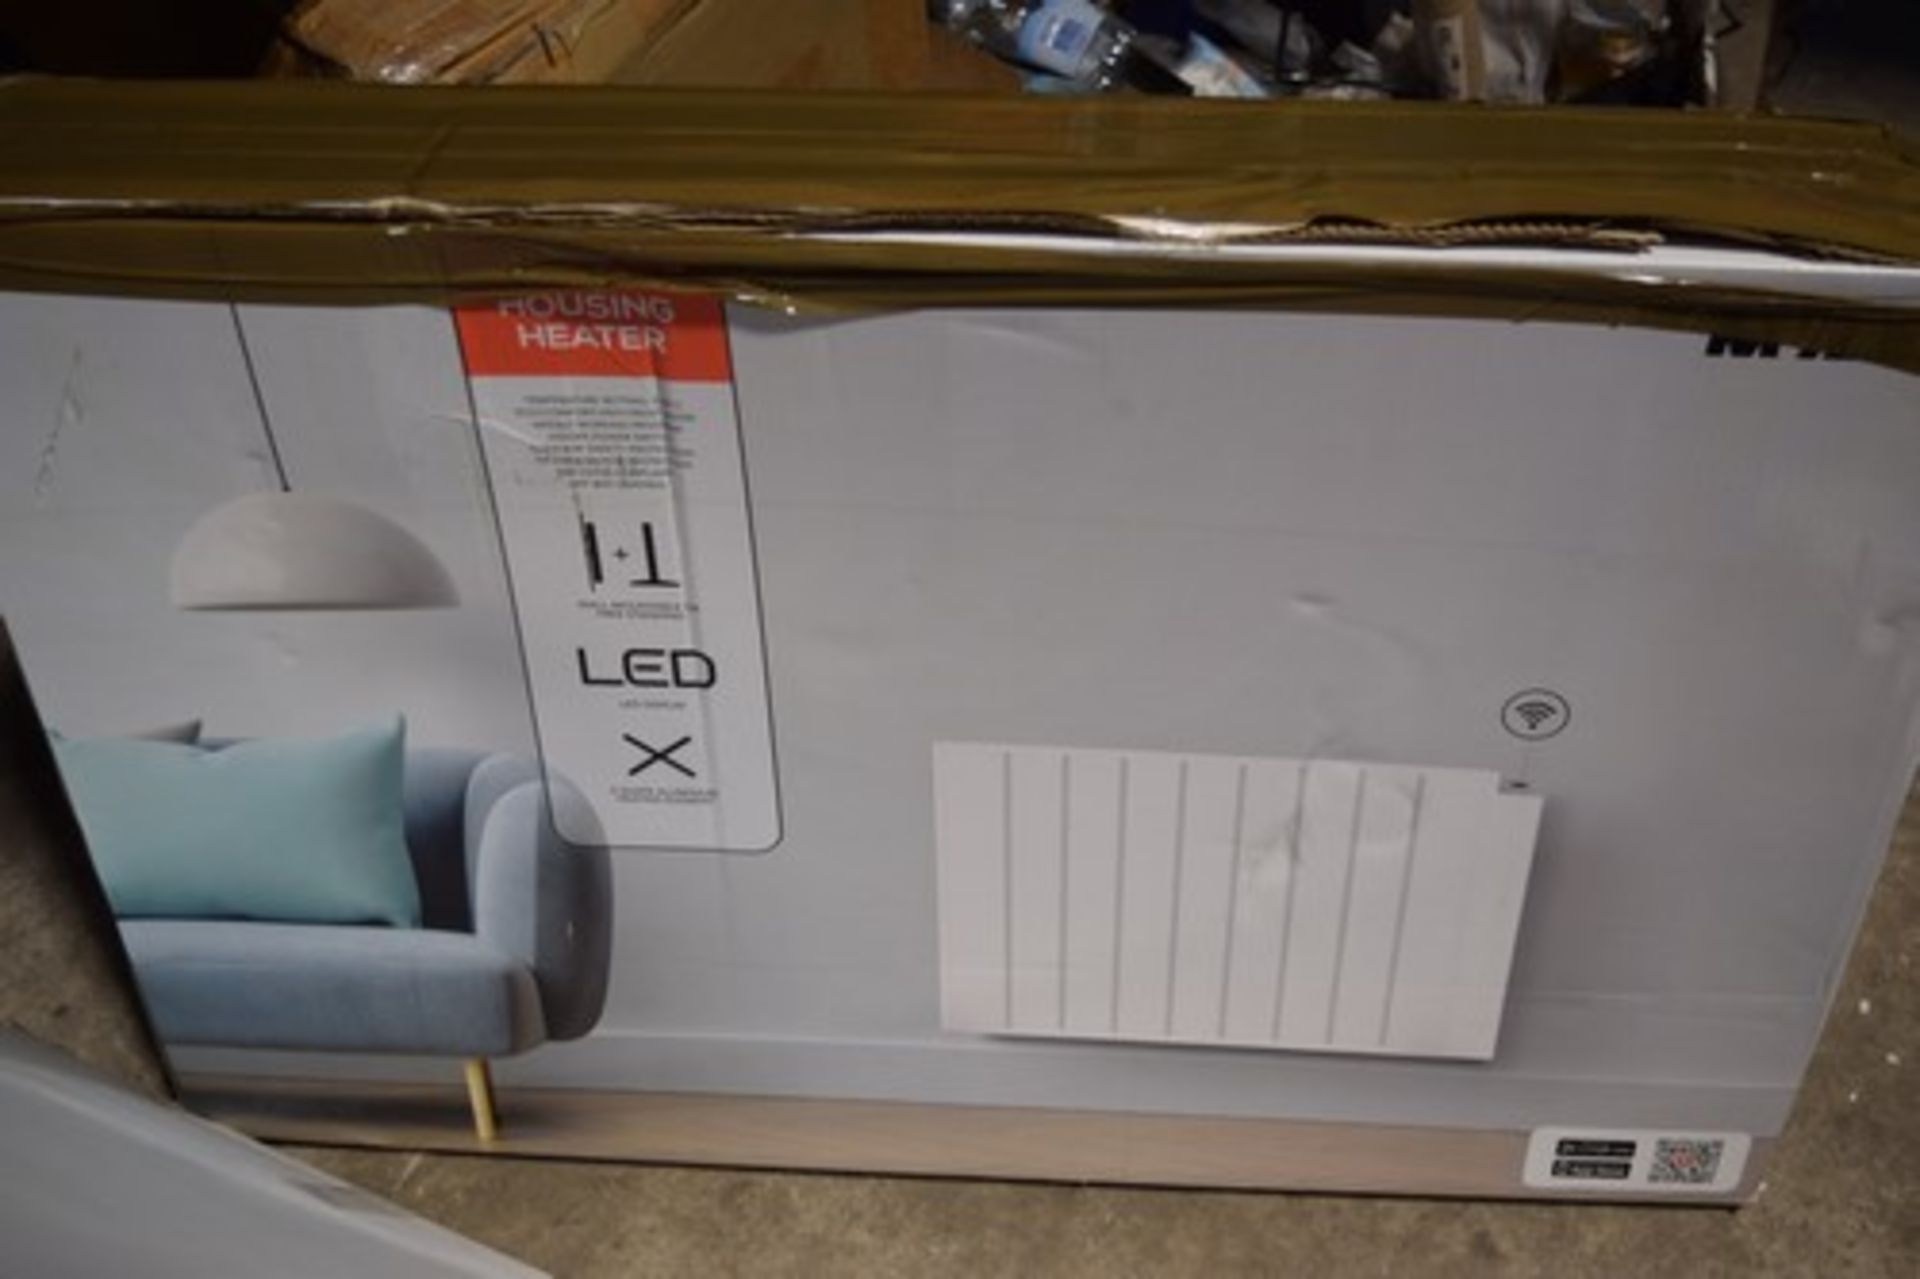 4 x assorted heaters including 1 x Mylek steel heater etc - new in box (ES1)16